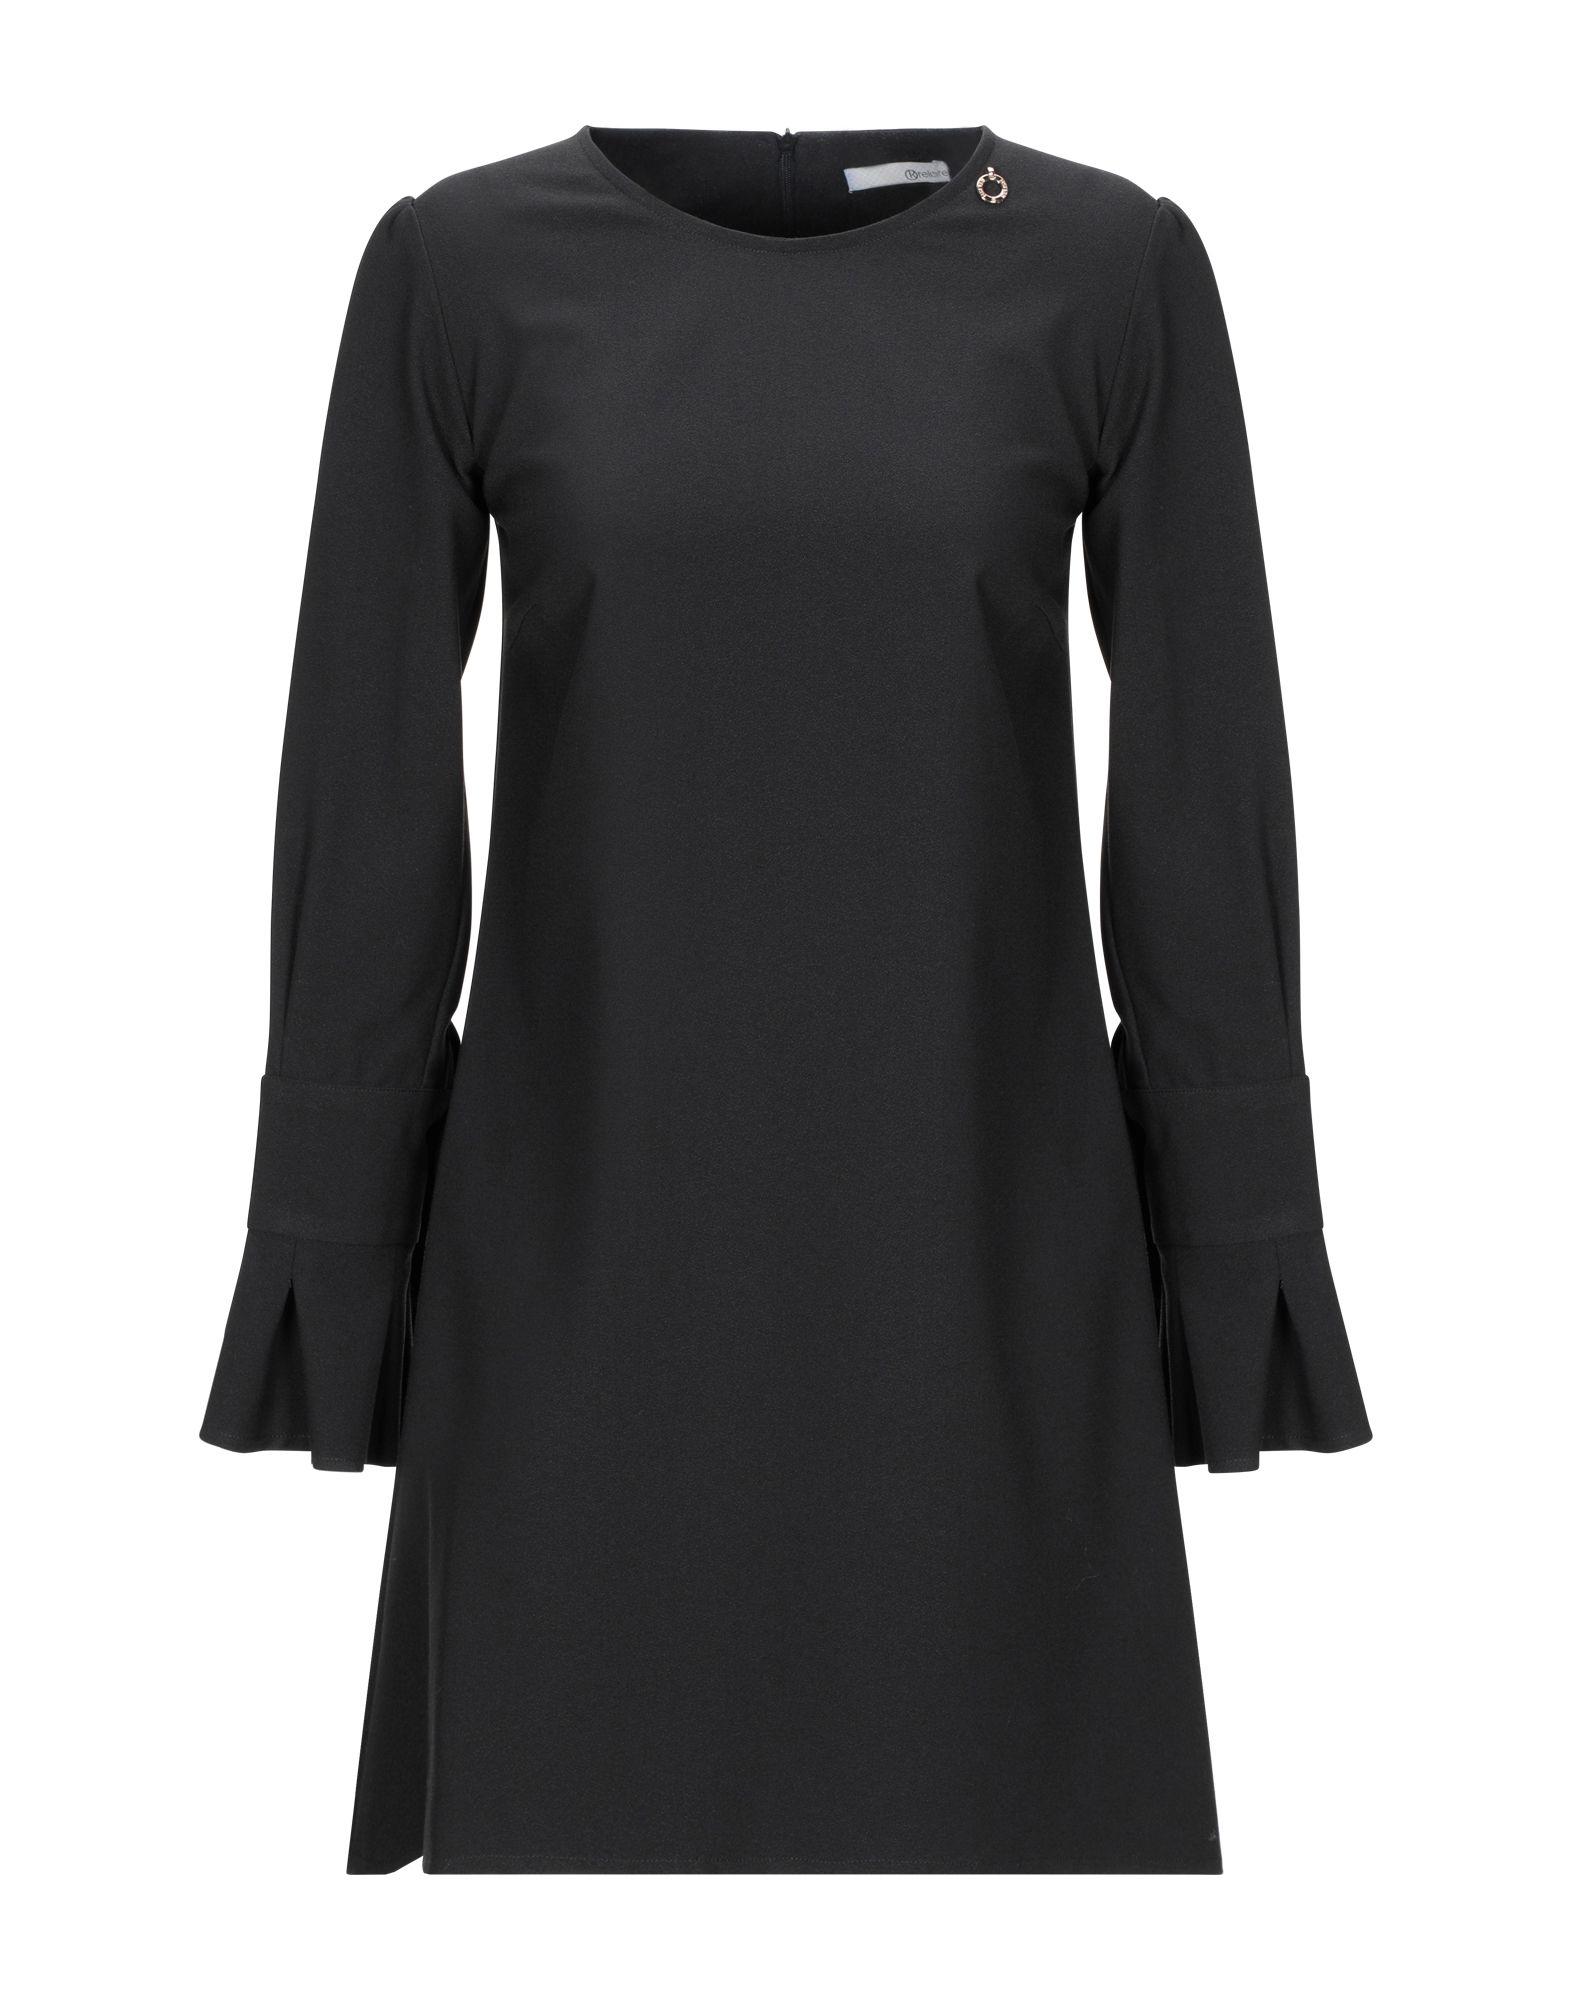 Relish Short Dress in Black - Lyst